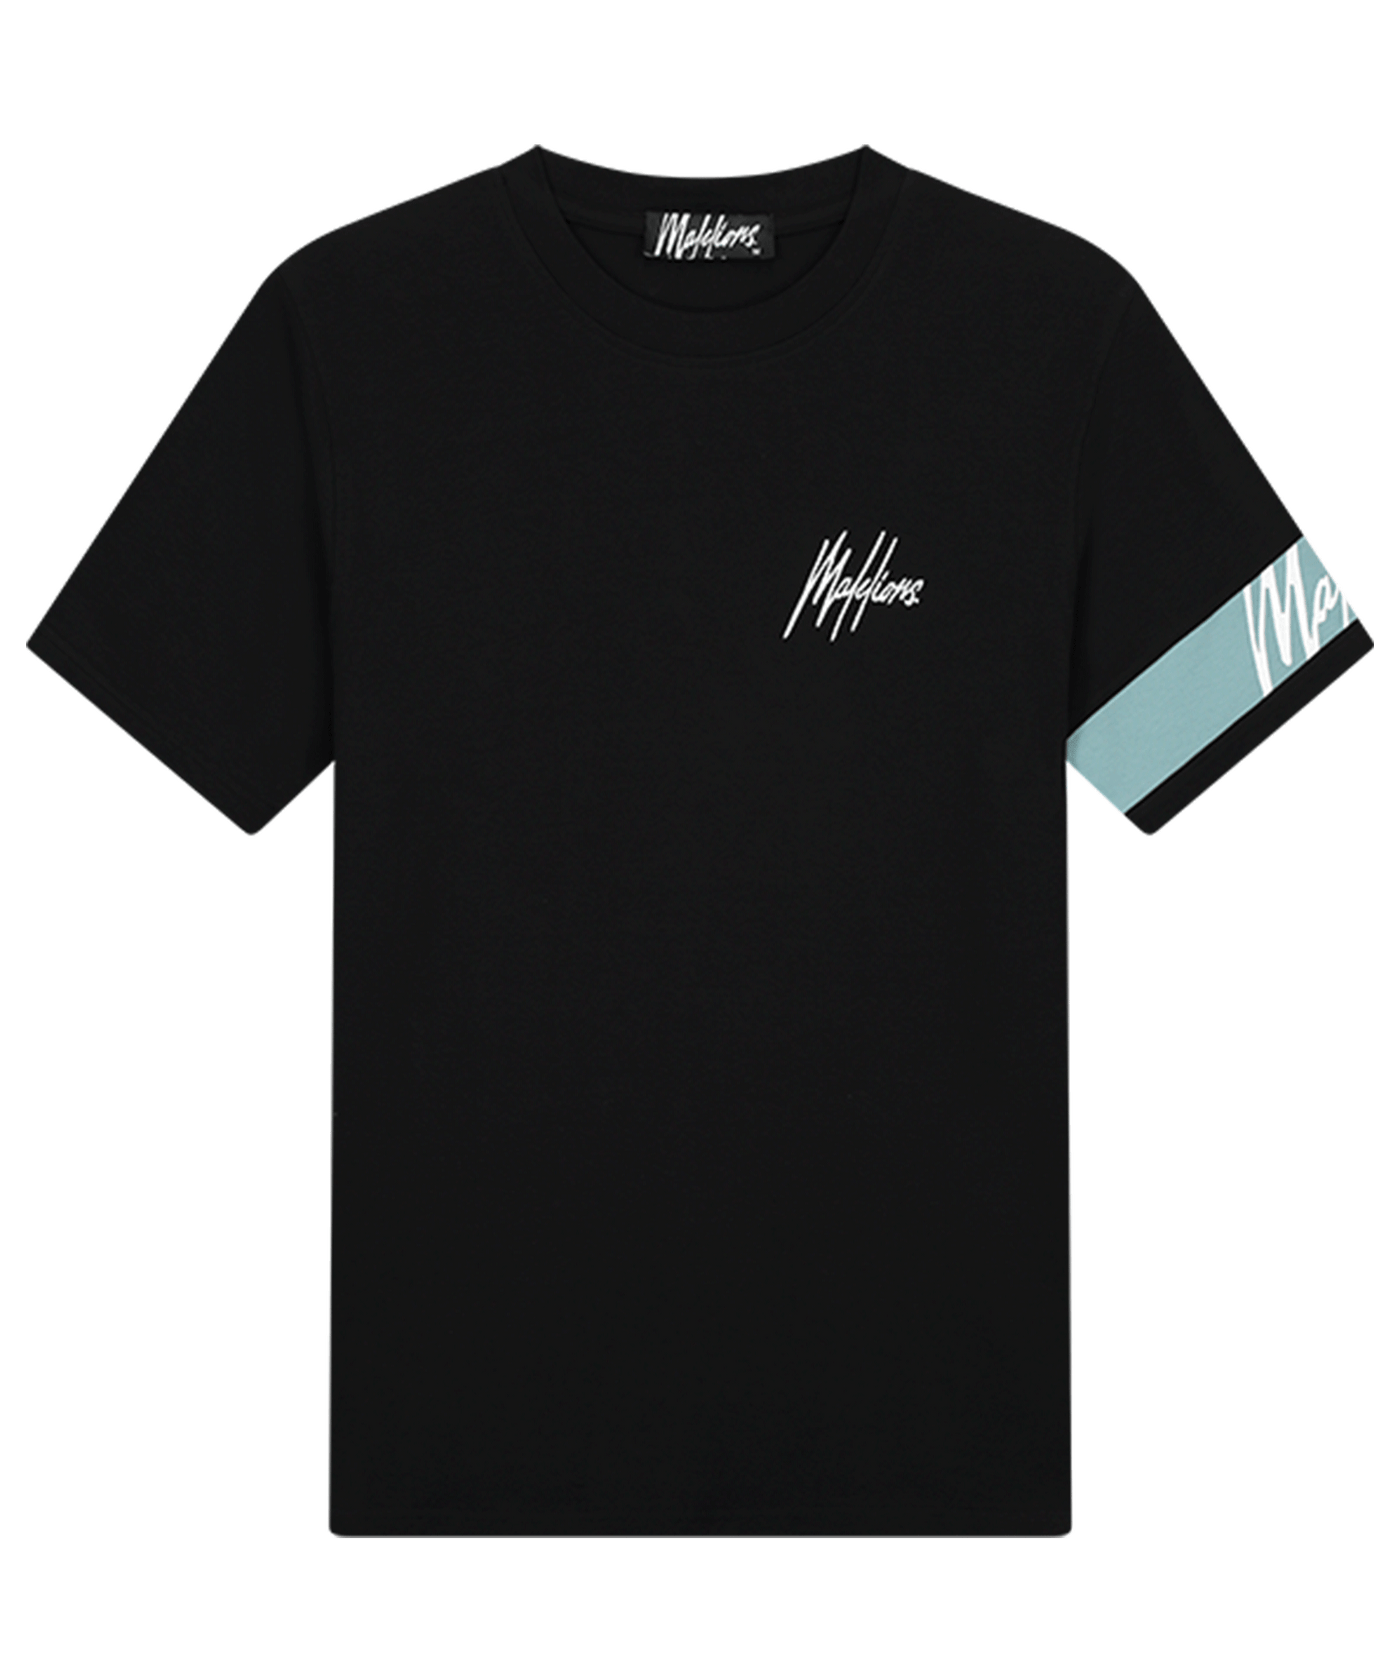 Malelions - Captain - T-shirt - Black/light Blue